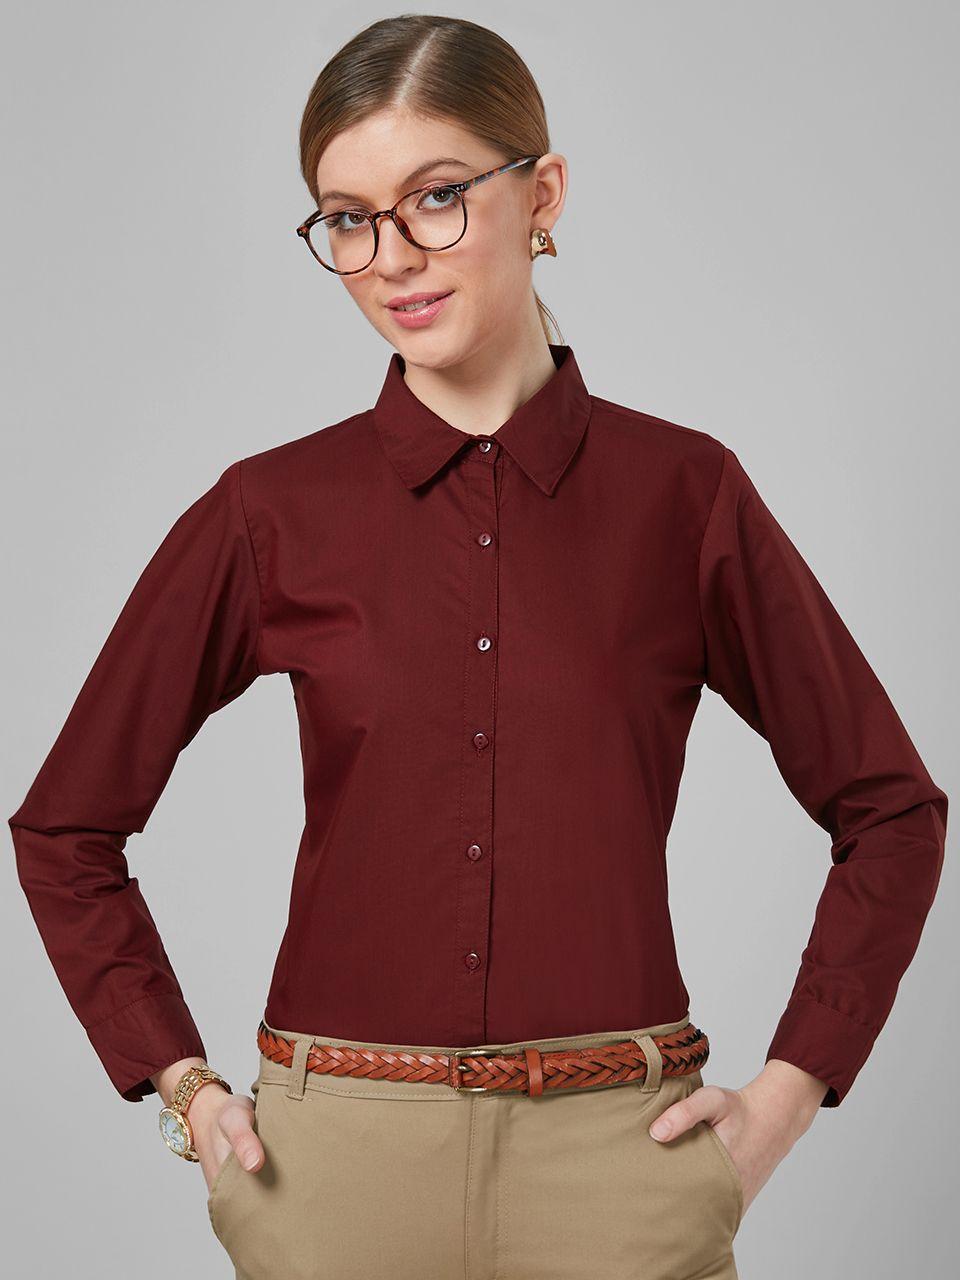 style quotient women smart formal shirt